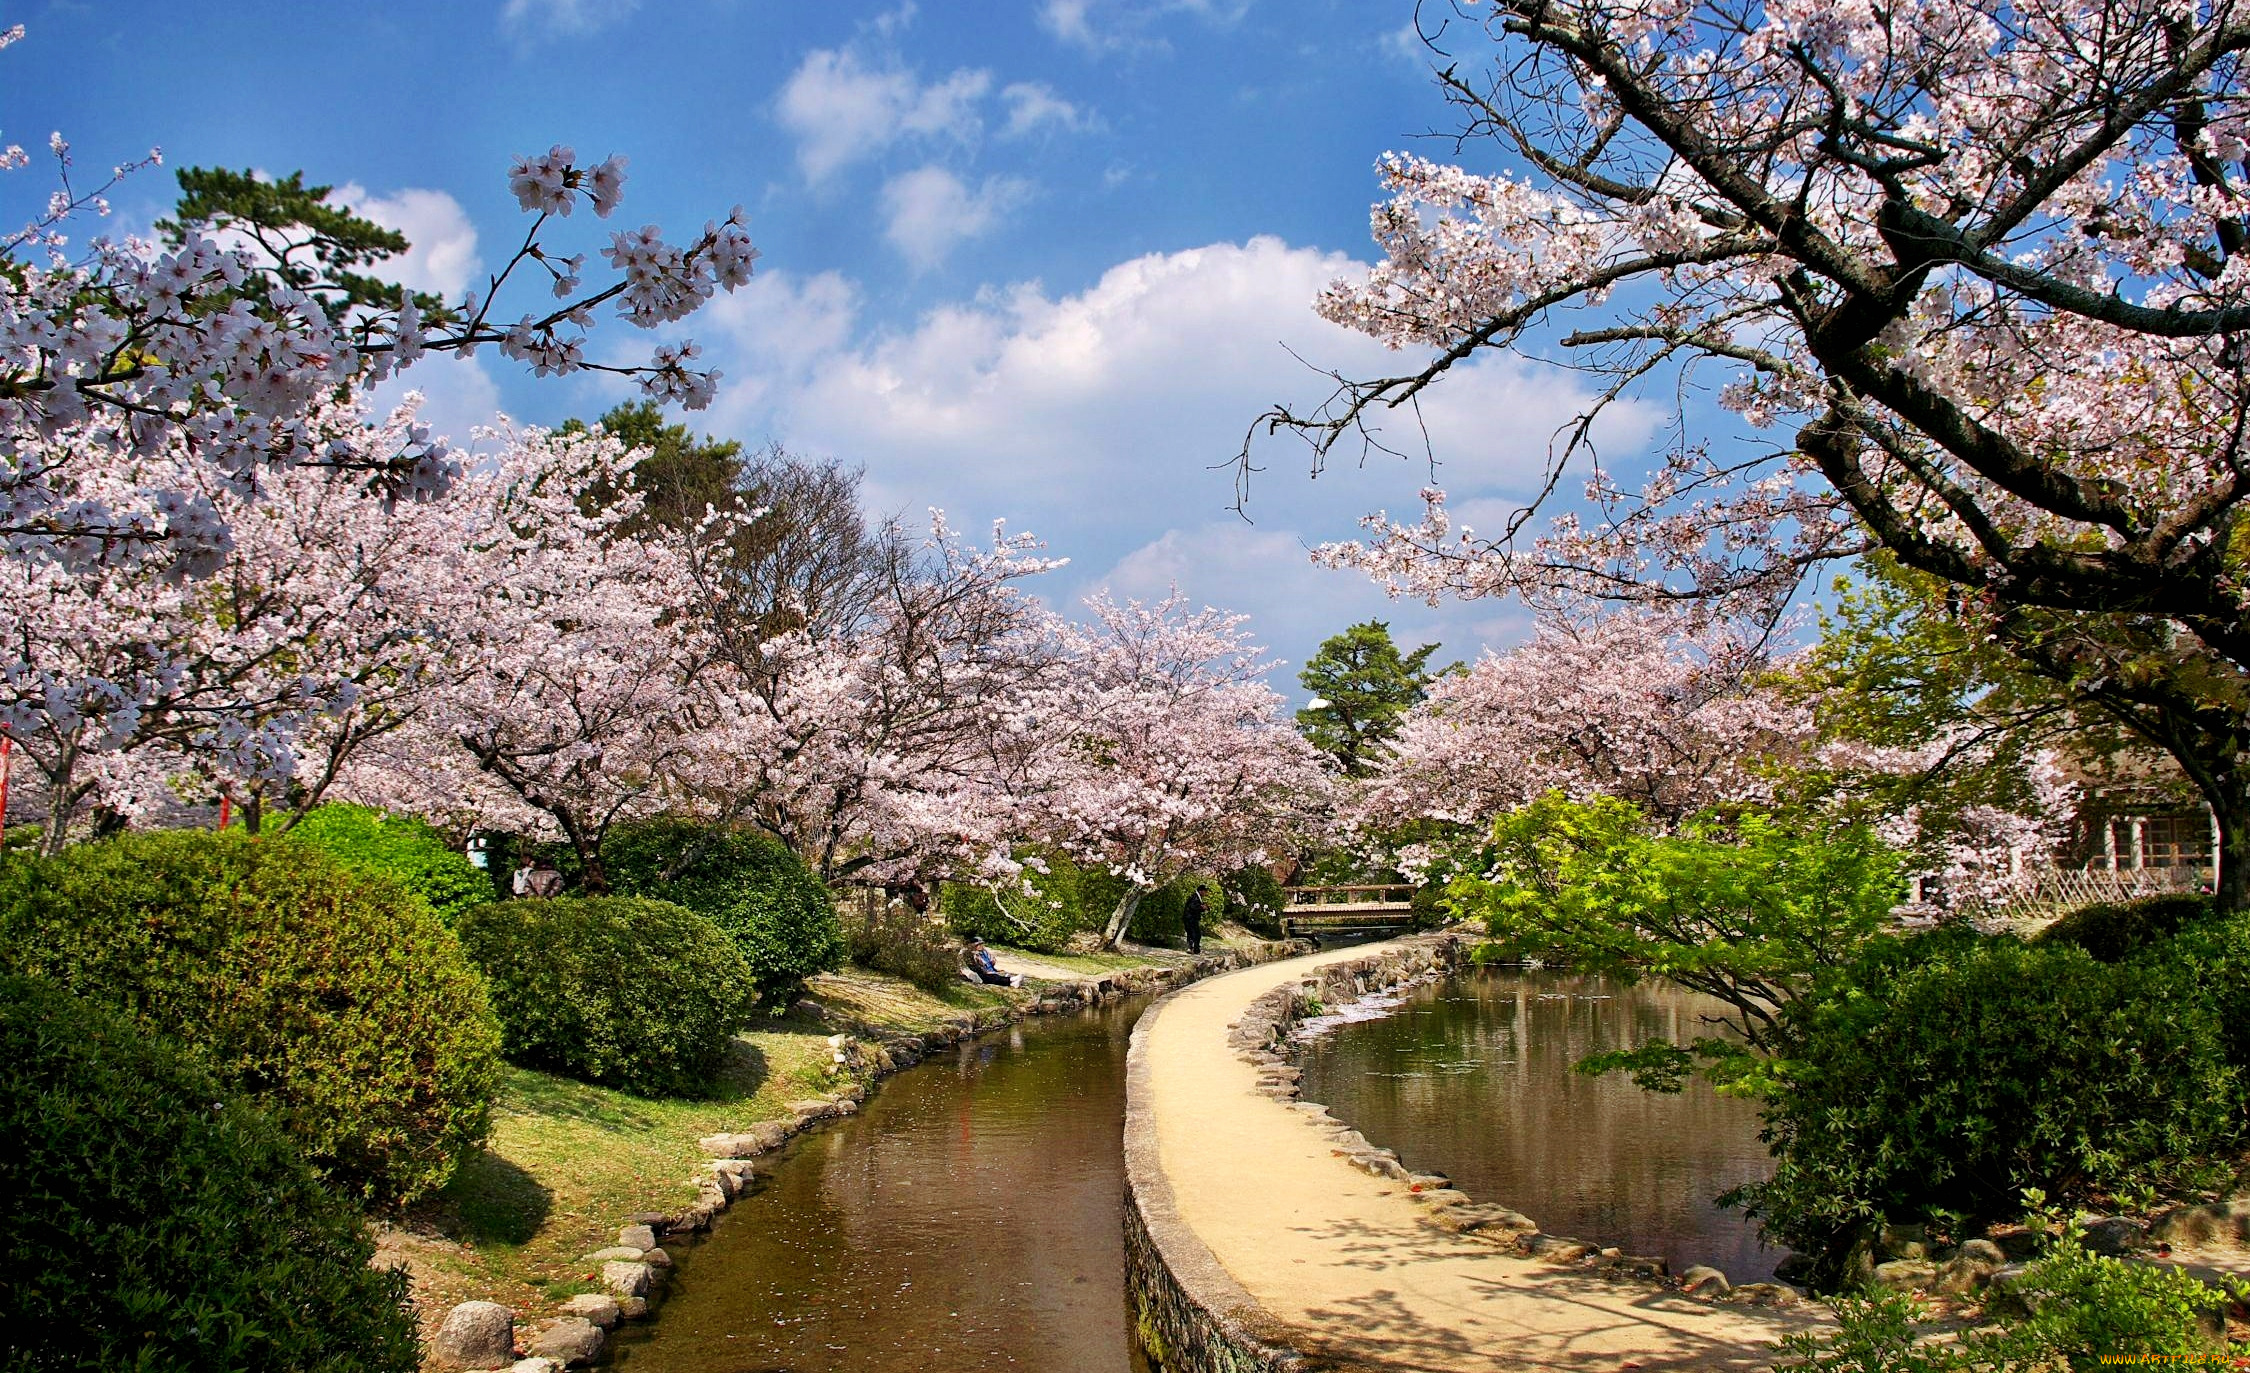 природа, парк, деревья, цветущая, сакура, канал, пруд